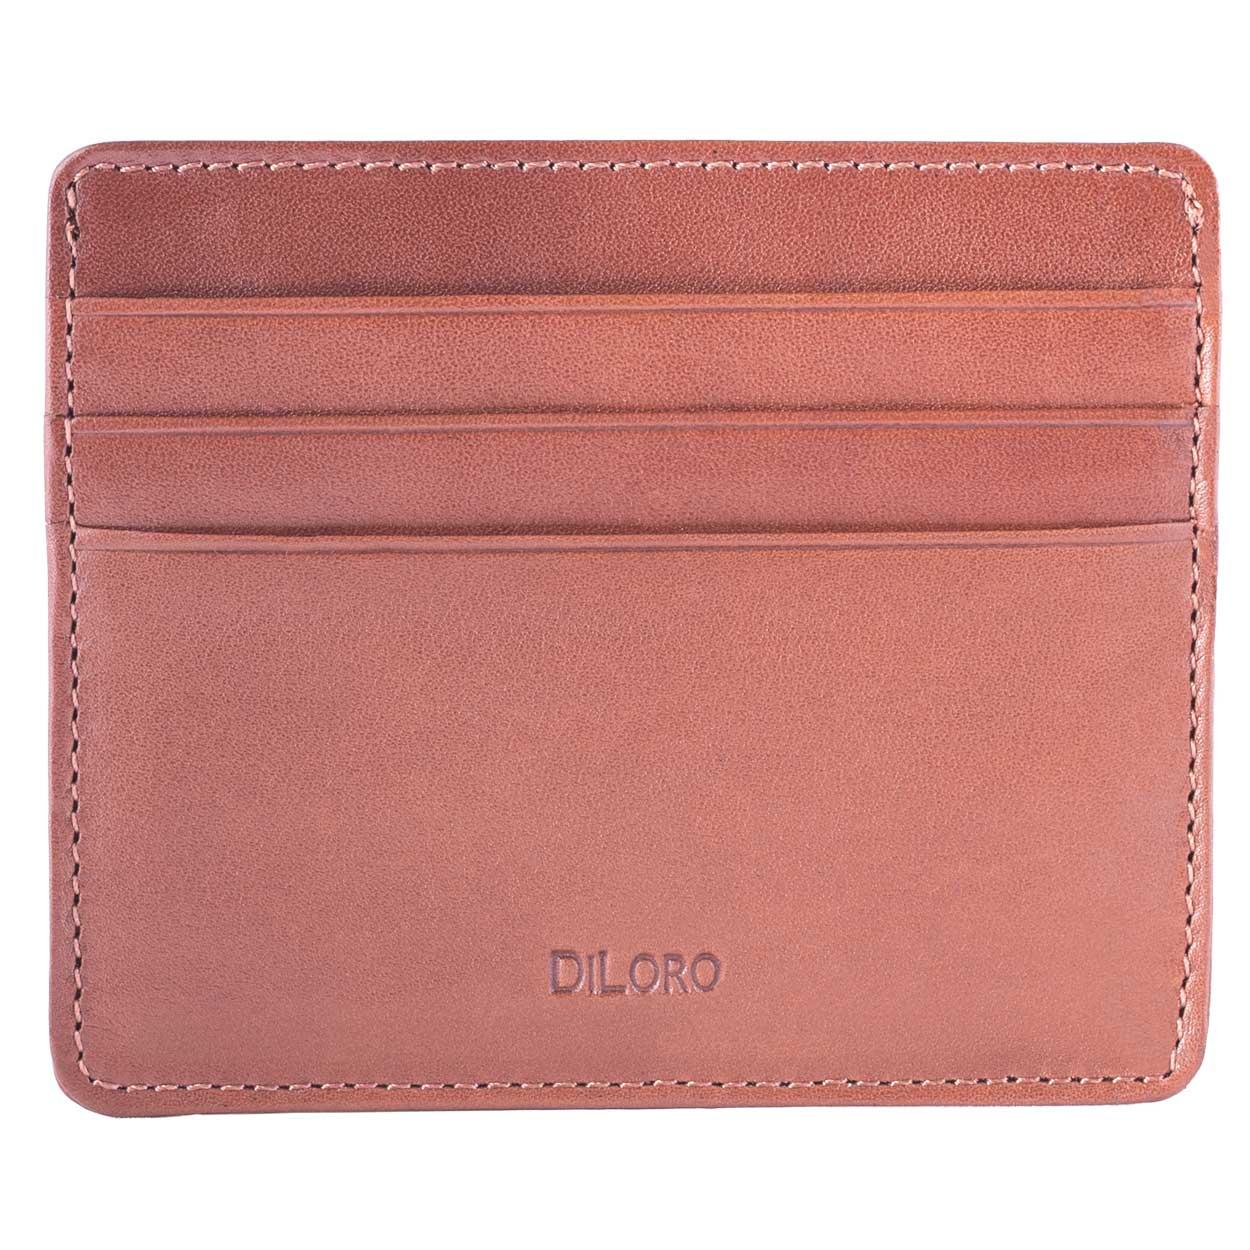 Bugatti Tan Nappa DiLoro Leather Ultra Slim RFID Blocking Minimalist Travel Card Wallet - Front View (Empty)